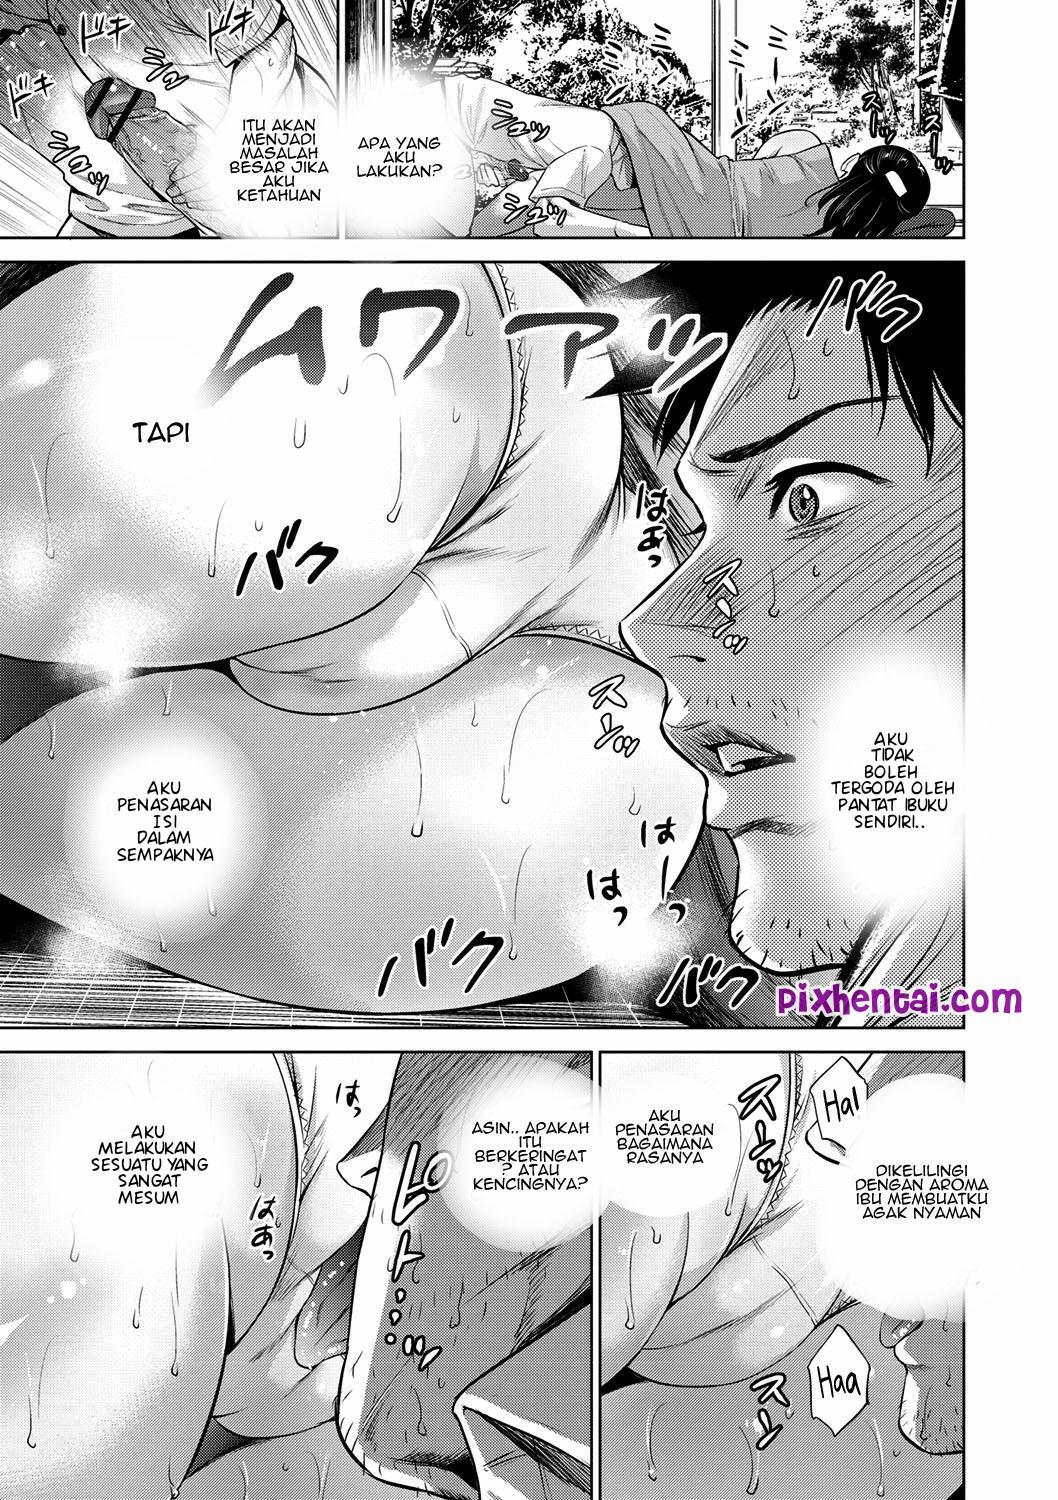 Ibu Montok jadi Bahan Coli saat Tidur Situs Komik Hentai Manga. pixhentai.c...